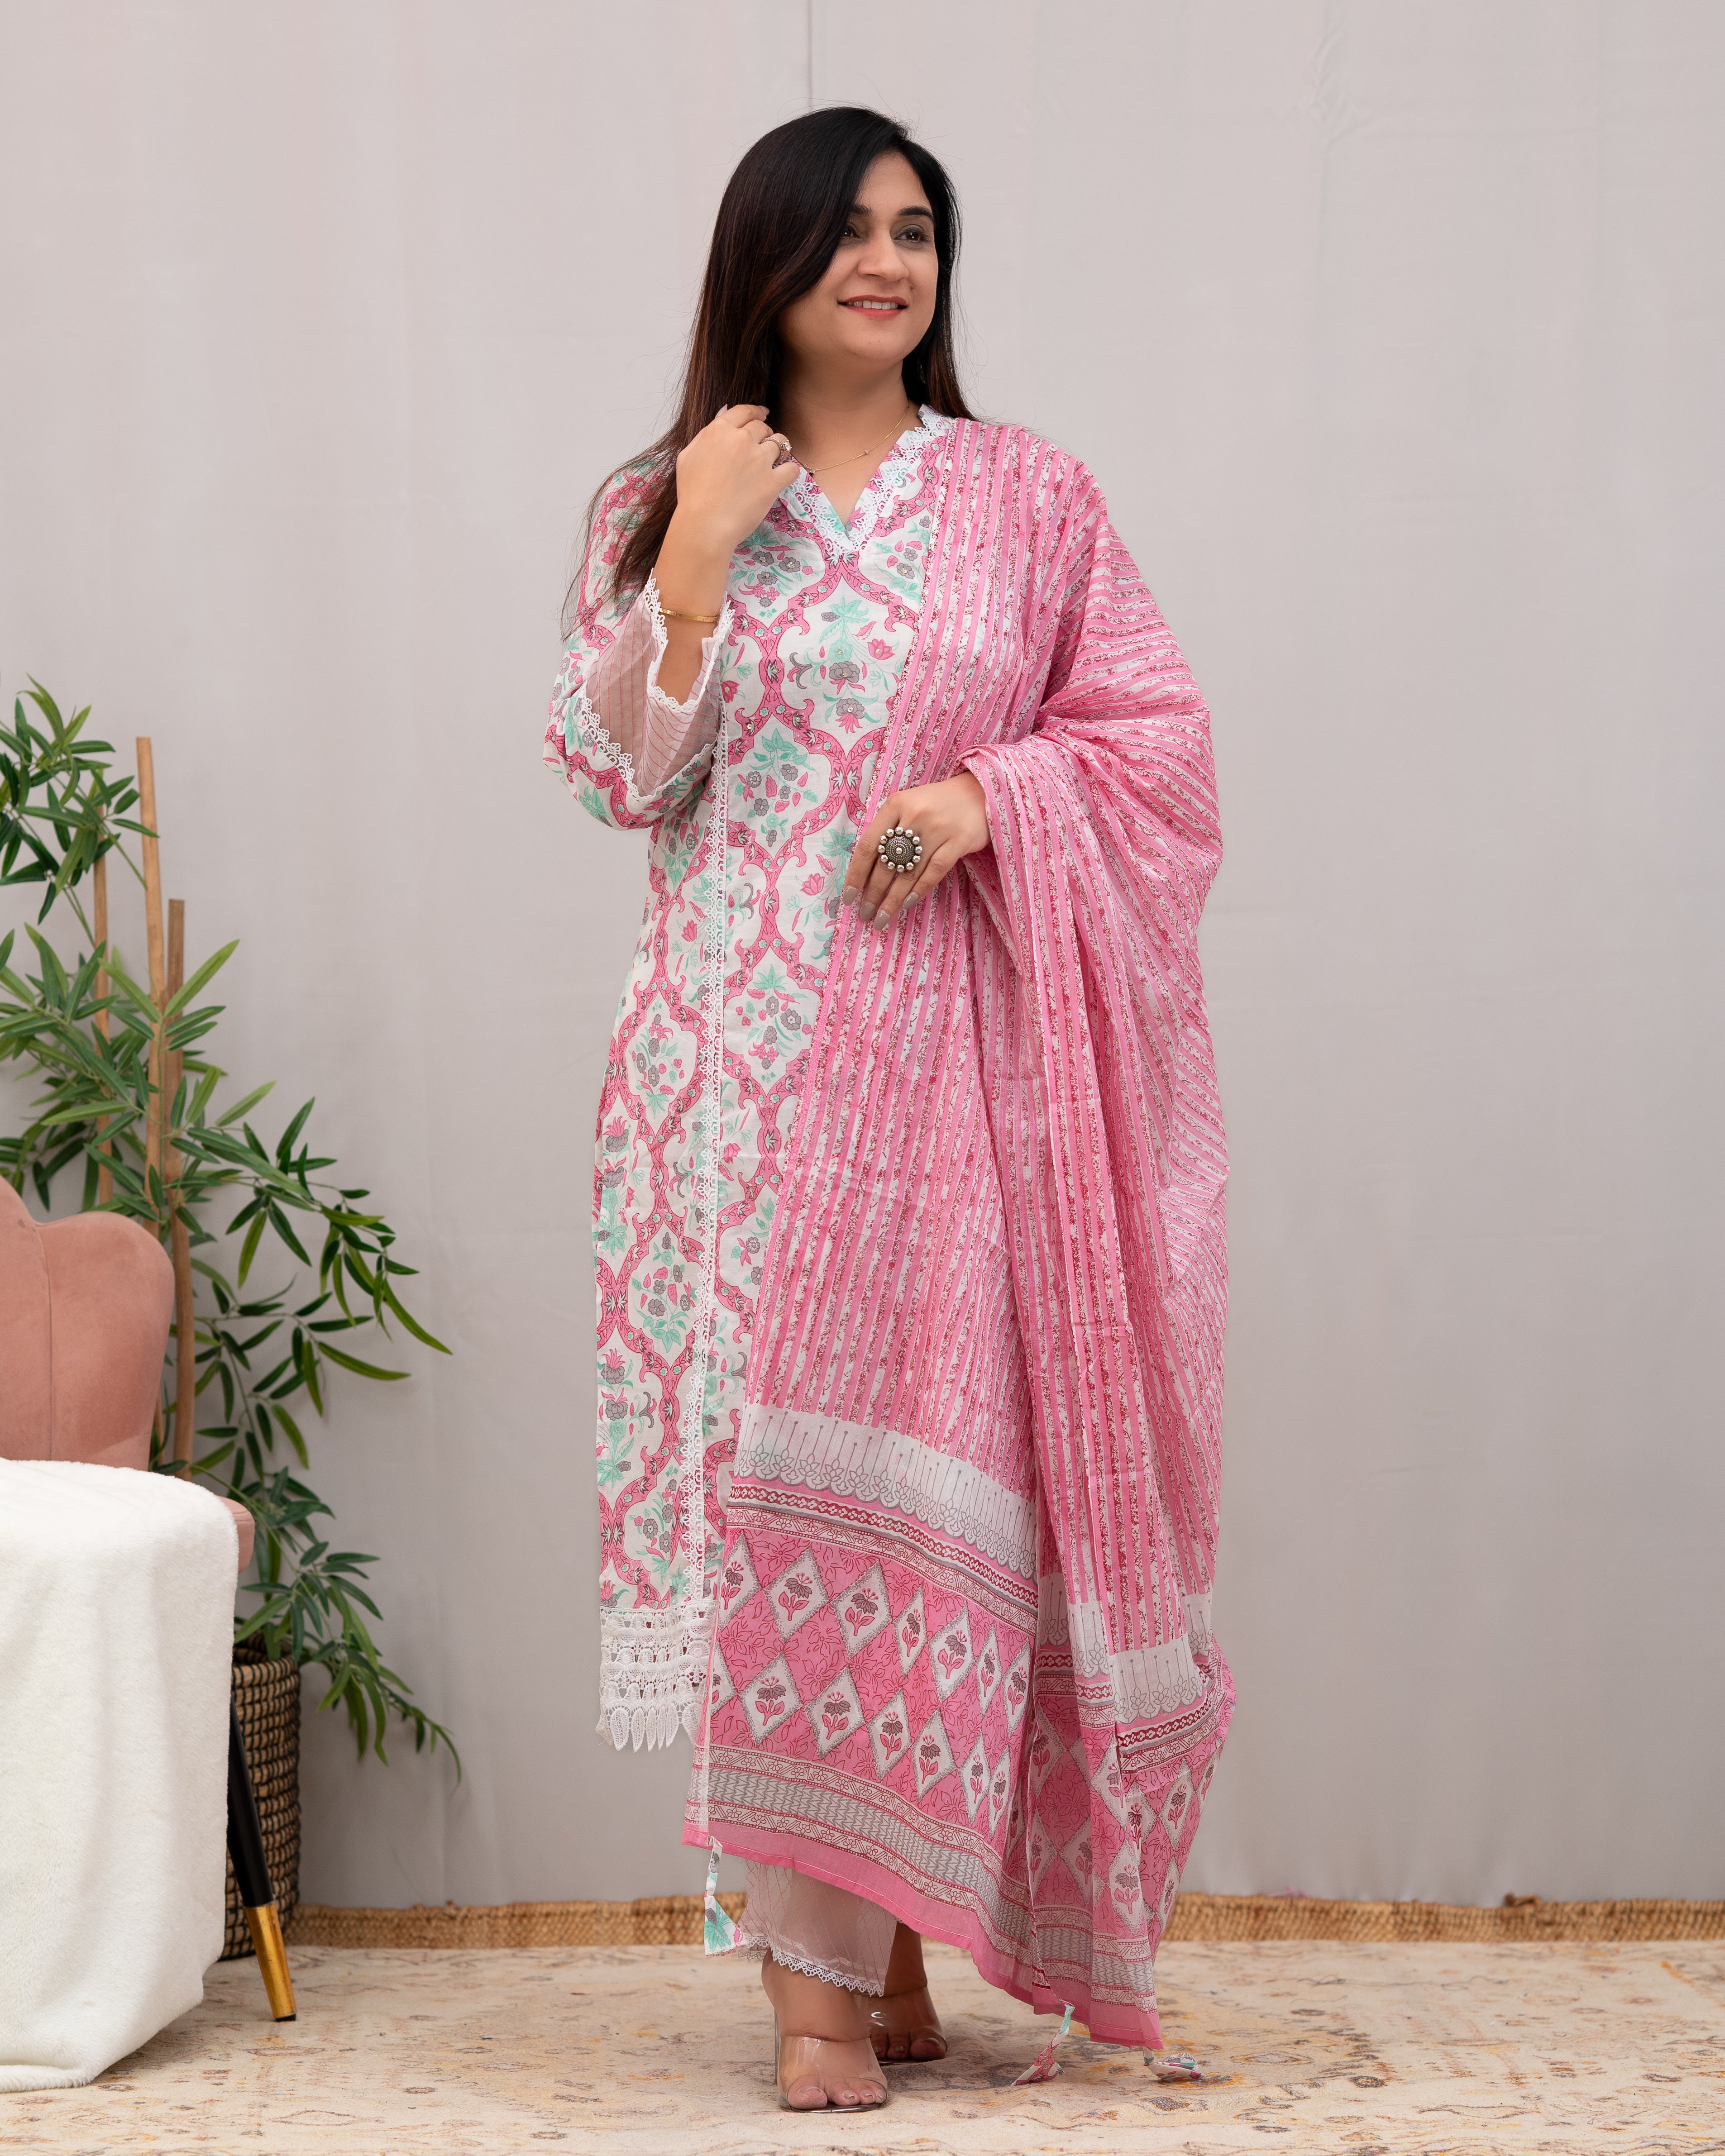 Shabana Cotton Pakistani Suit with Lace Detailing - The Jaipur Studio